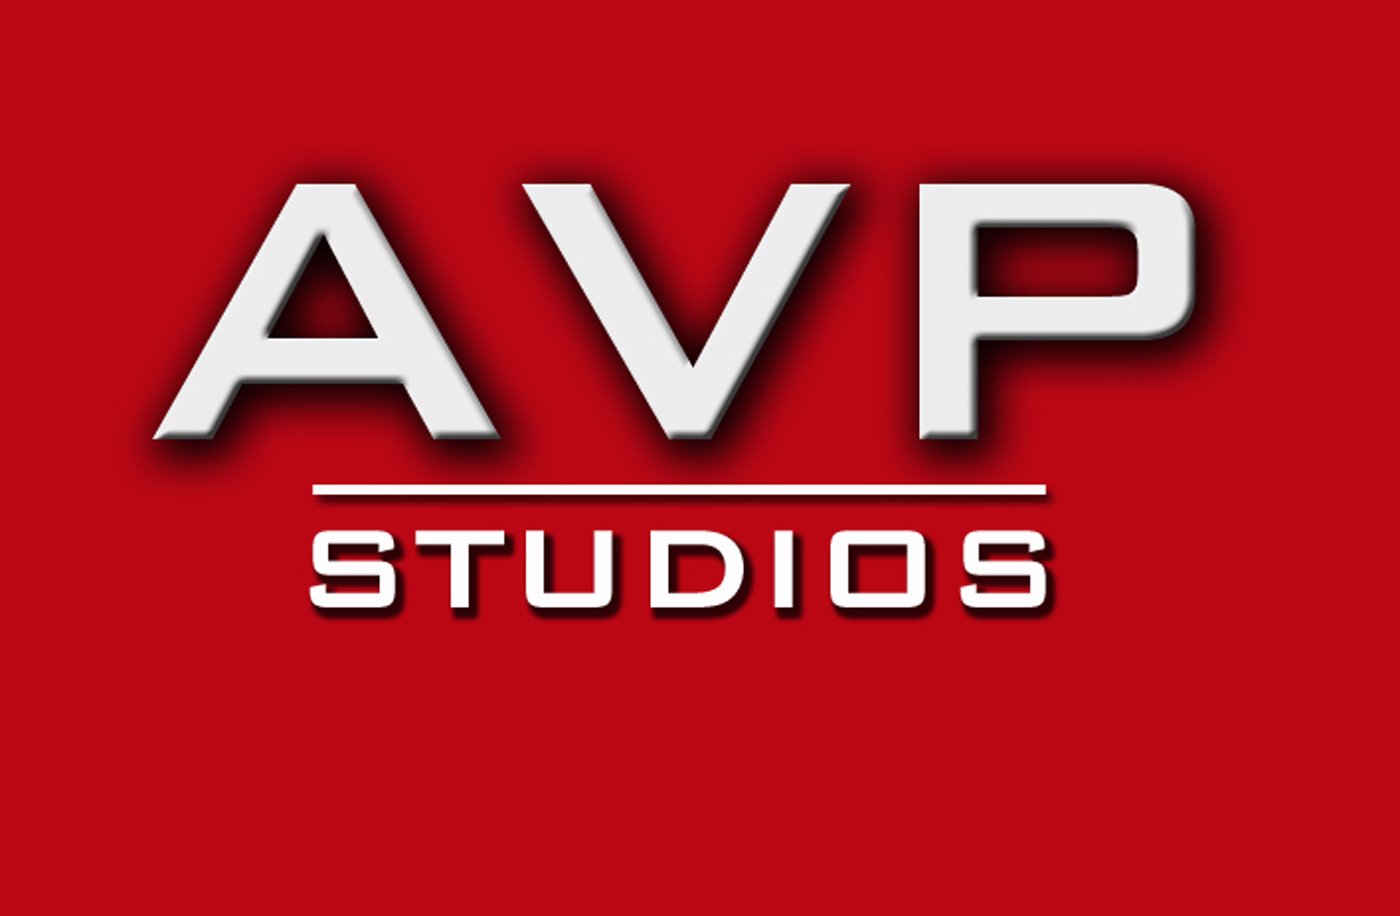 Wilson AVP логотип. Share studios